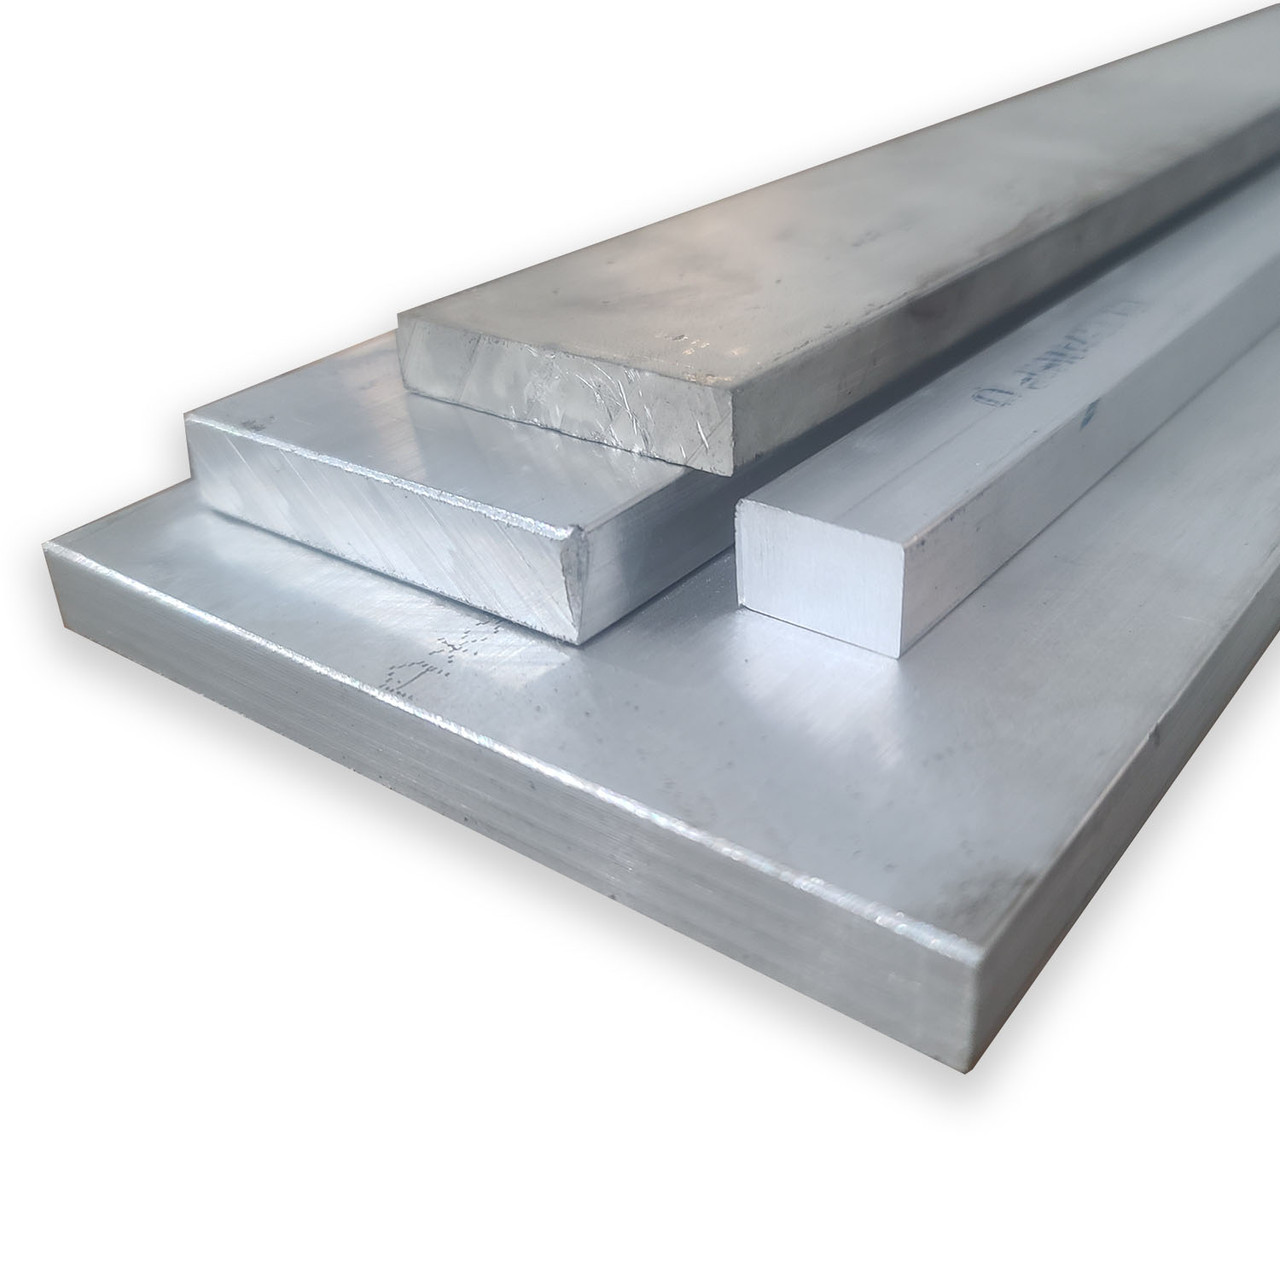 1.75" x 2" x 24", 2024-T351 Aluminum Flat Bar